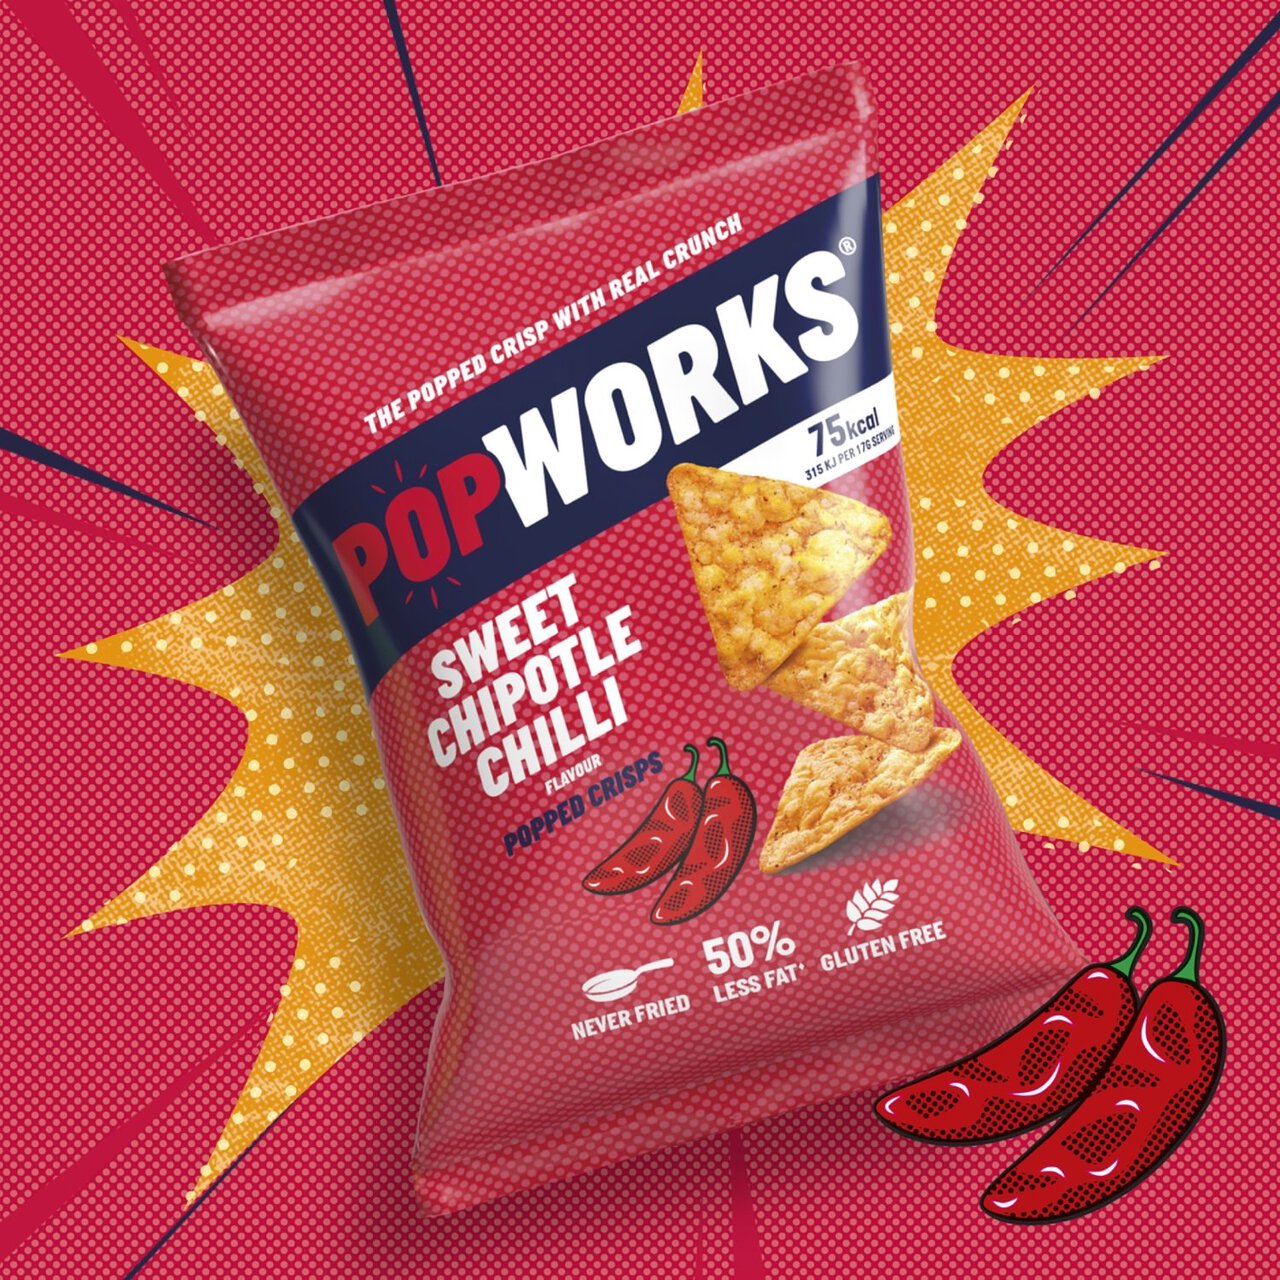 PopWorks Sweet Chipotle Chilli Popped Crisps Sharing Bag 85g